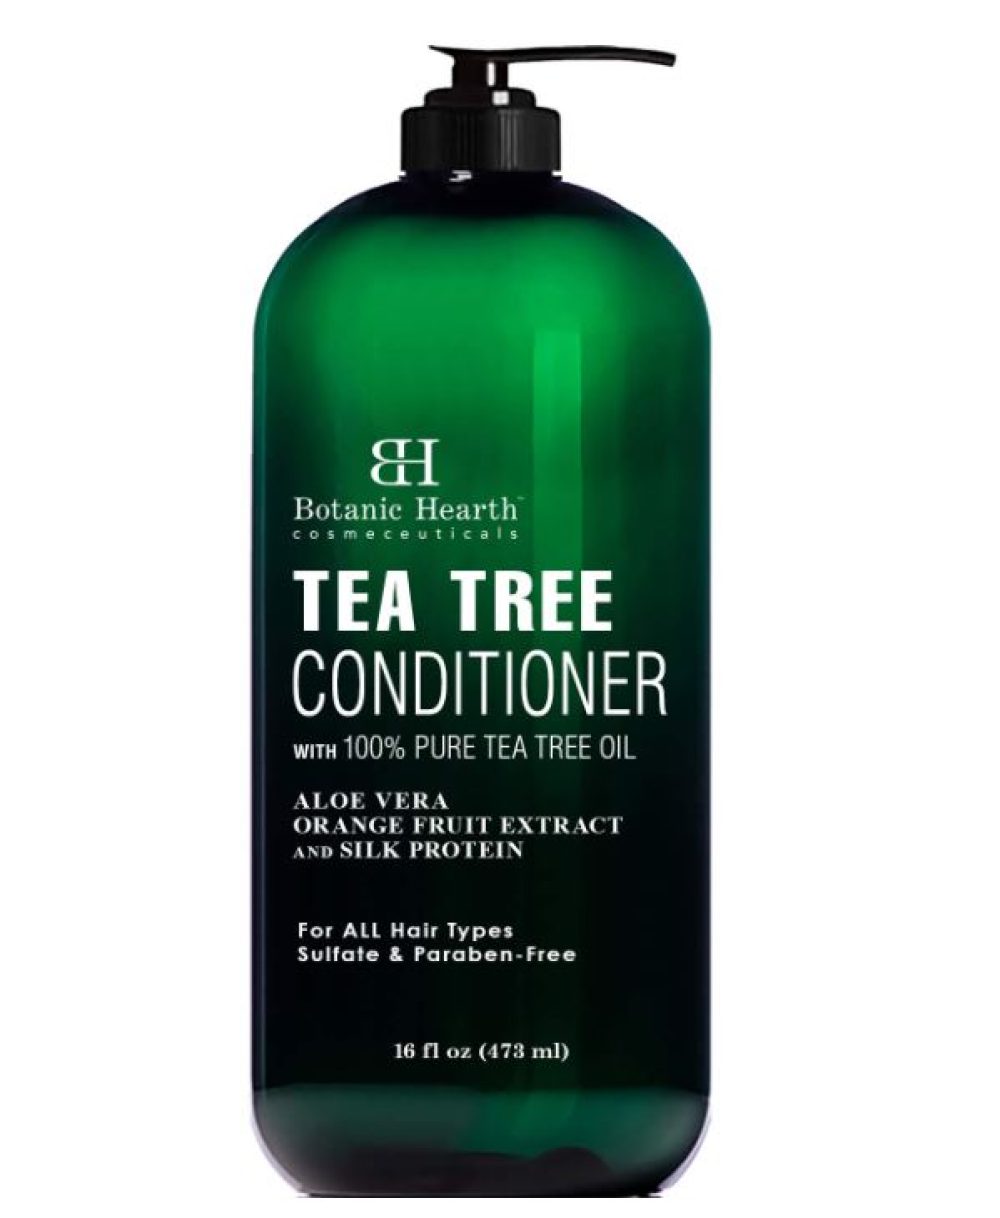 Tea tree conditioner